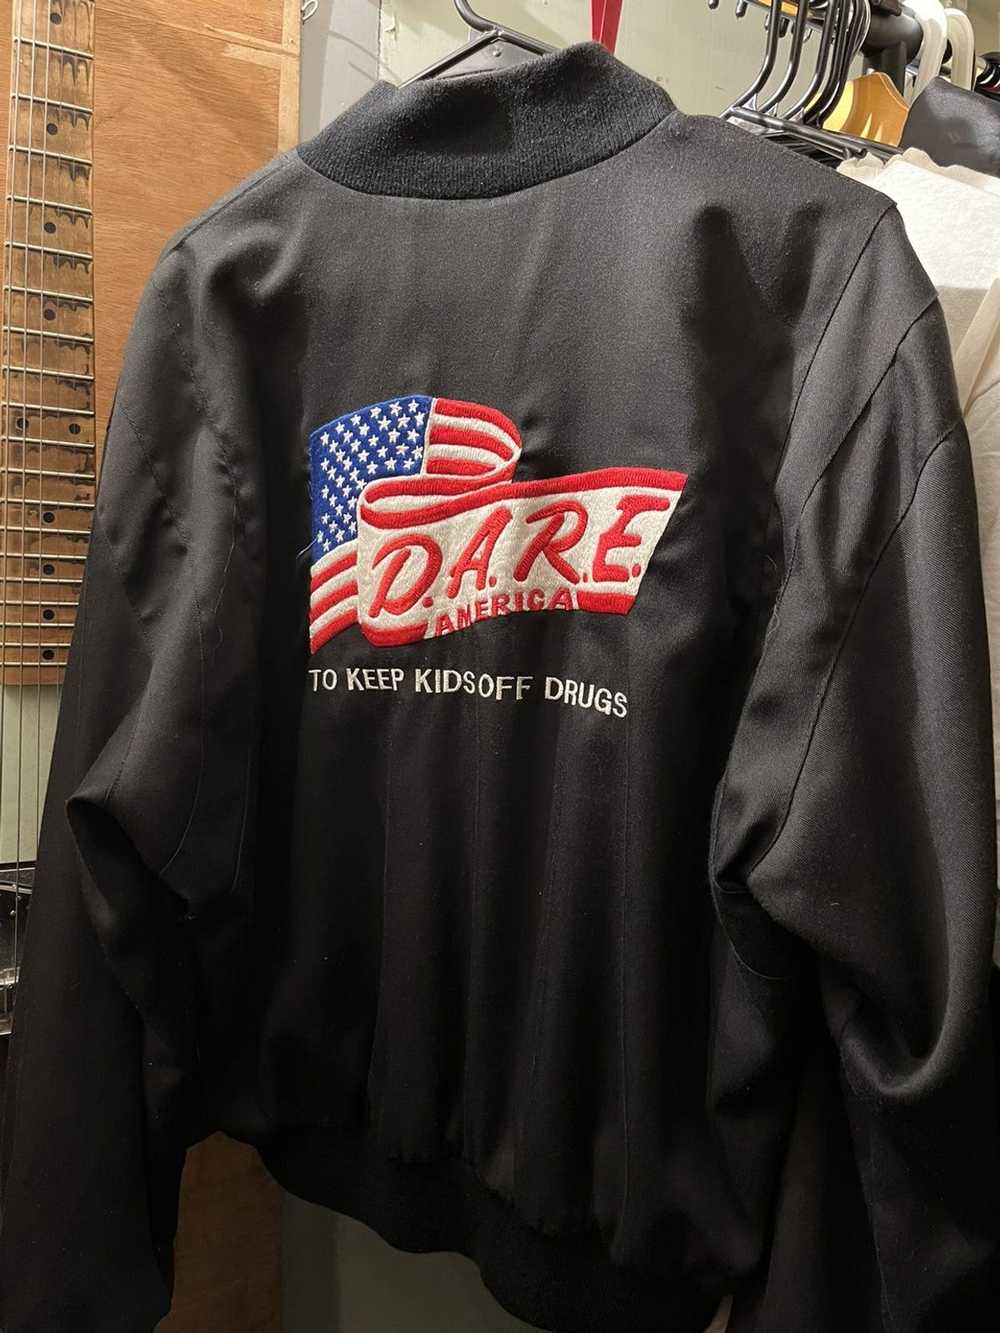 D.A.R.E Vintage DARE bomber jacket - image 2